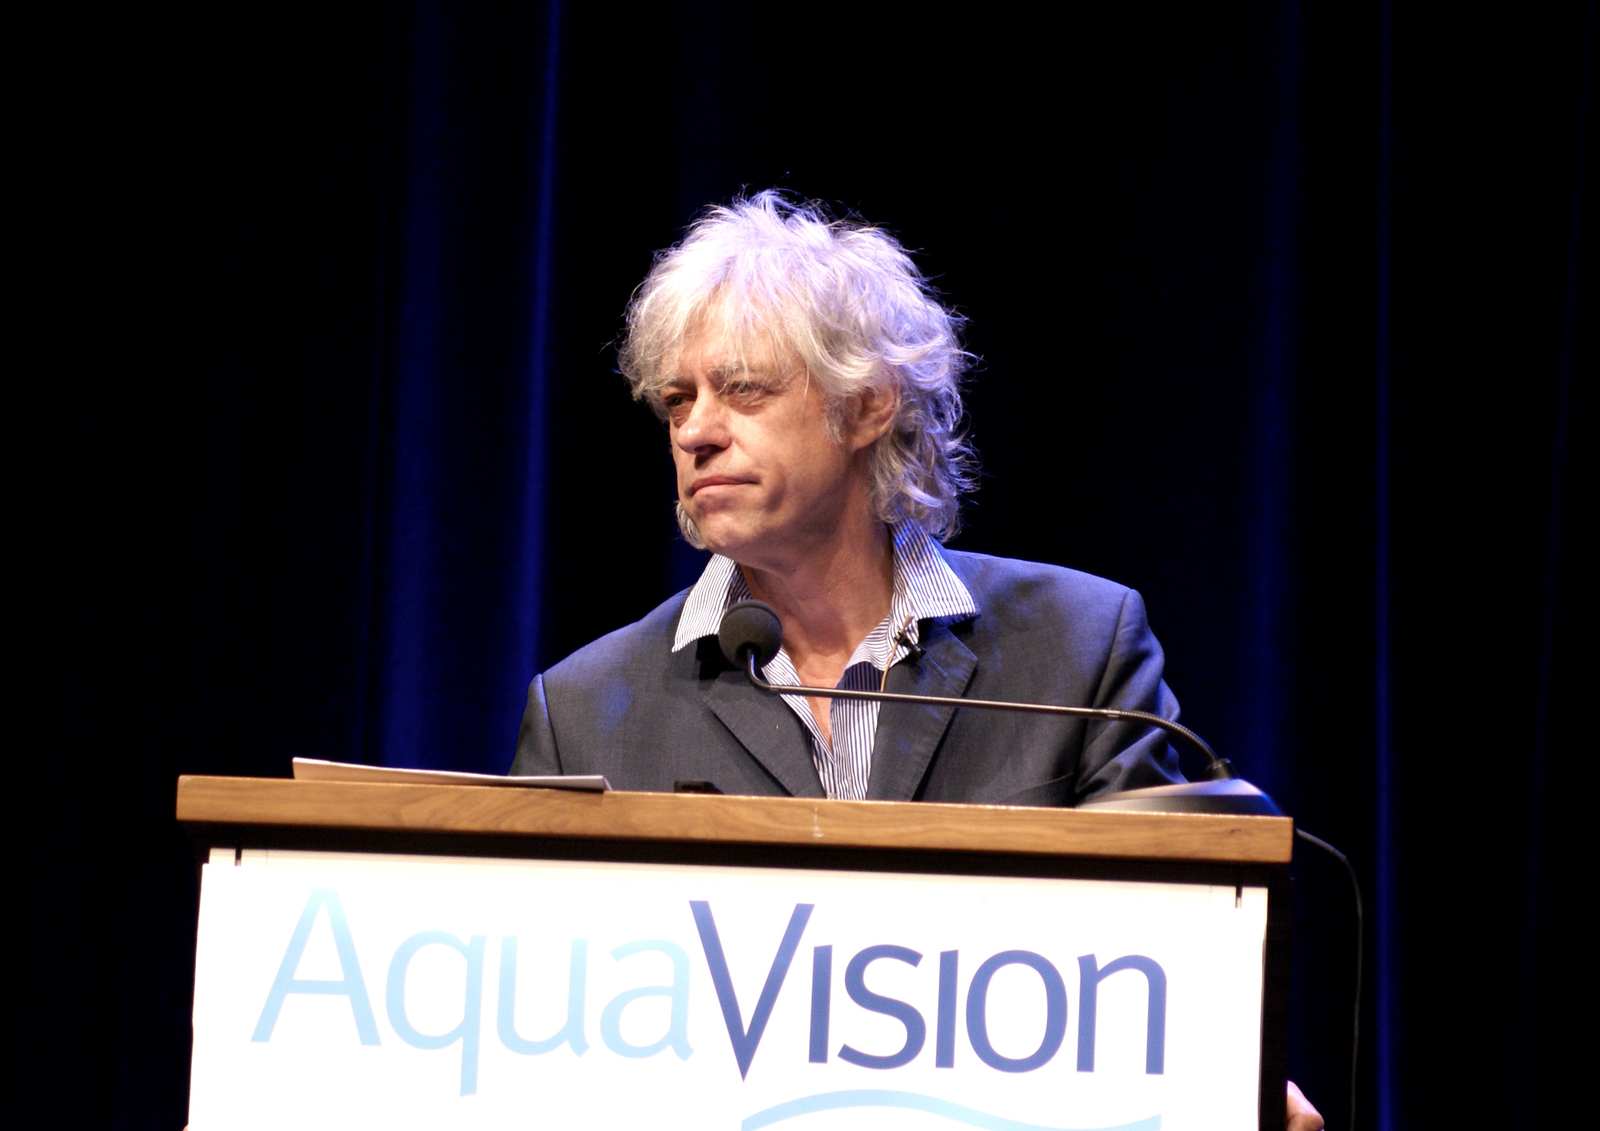 International rockstar speaks at Aquavision 2014